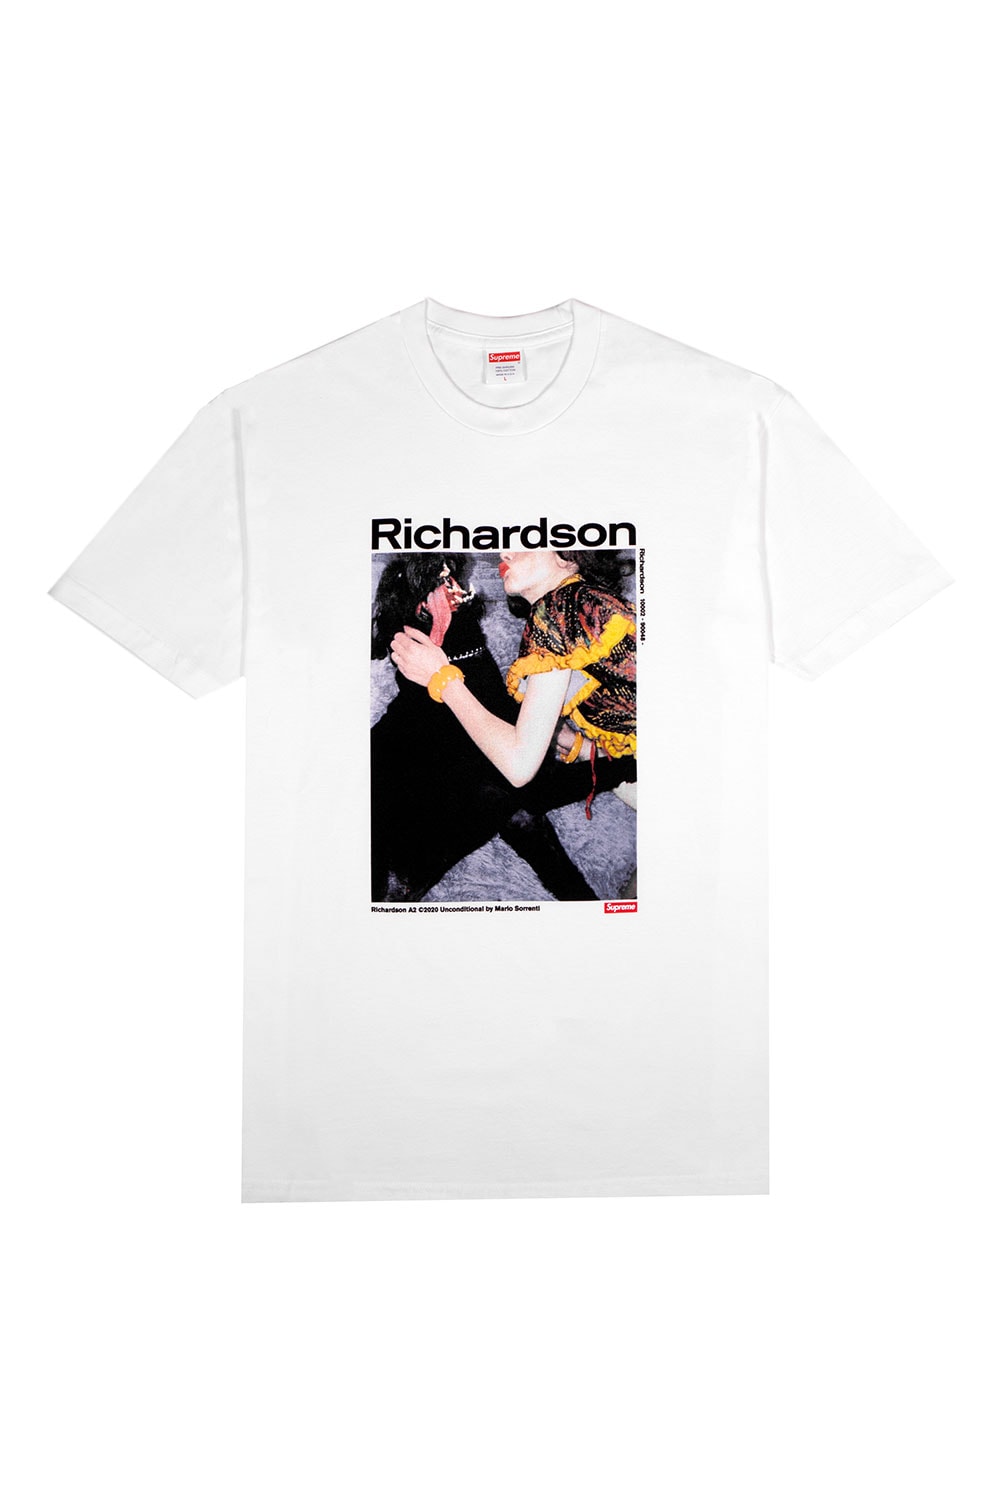 Richardson x Supreme Unconditional Collaborative Tshirt tee A2 Mario Sorrenti Tokyo Harajuku Japan flagship exclusive James Jebbia David Sims Larry Clark